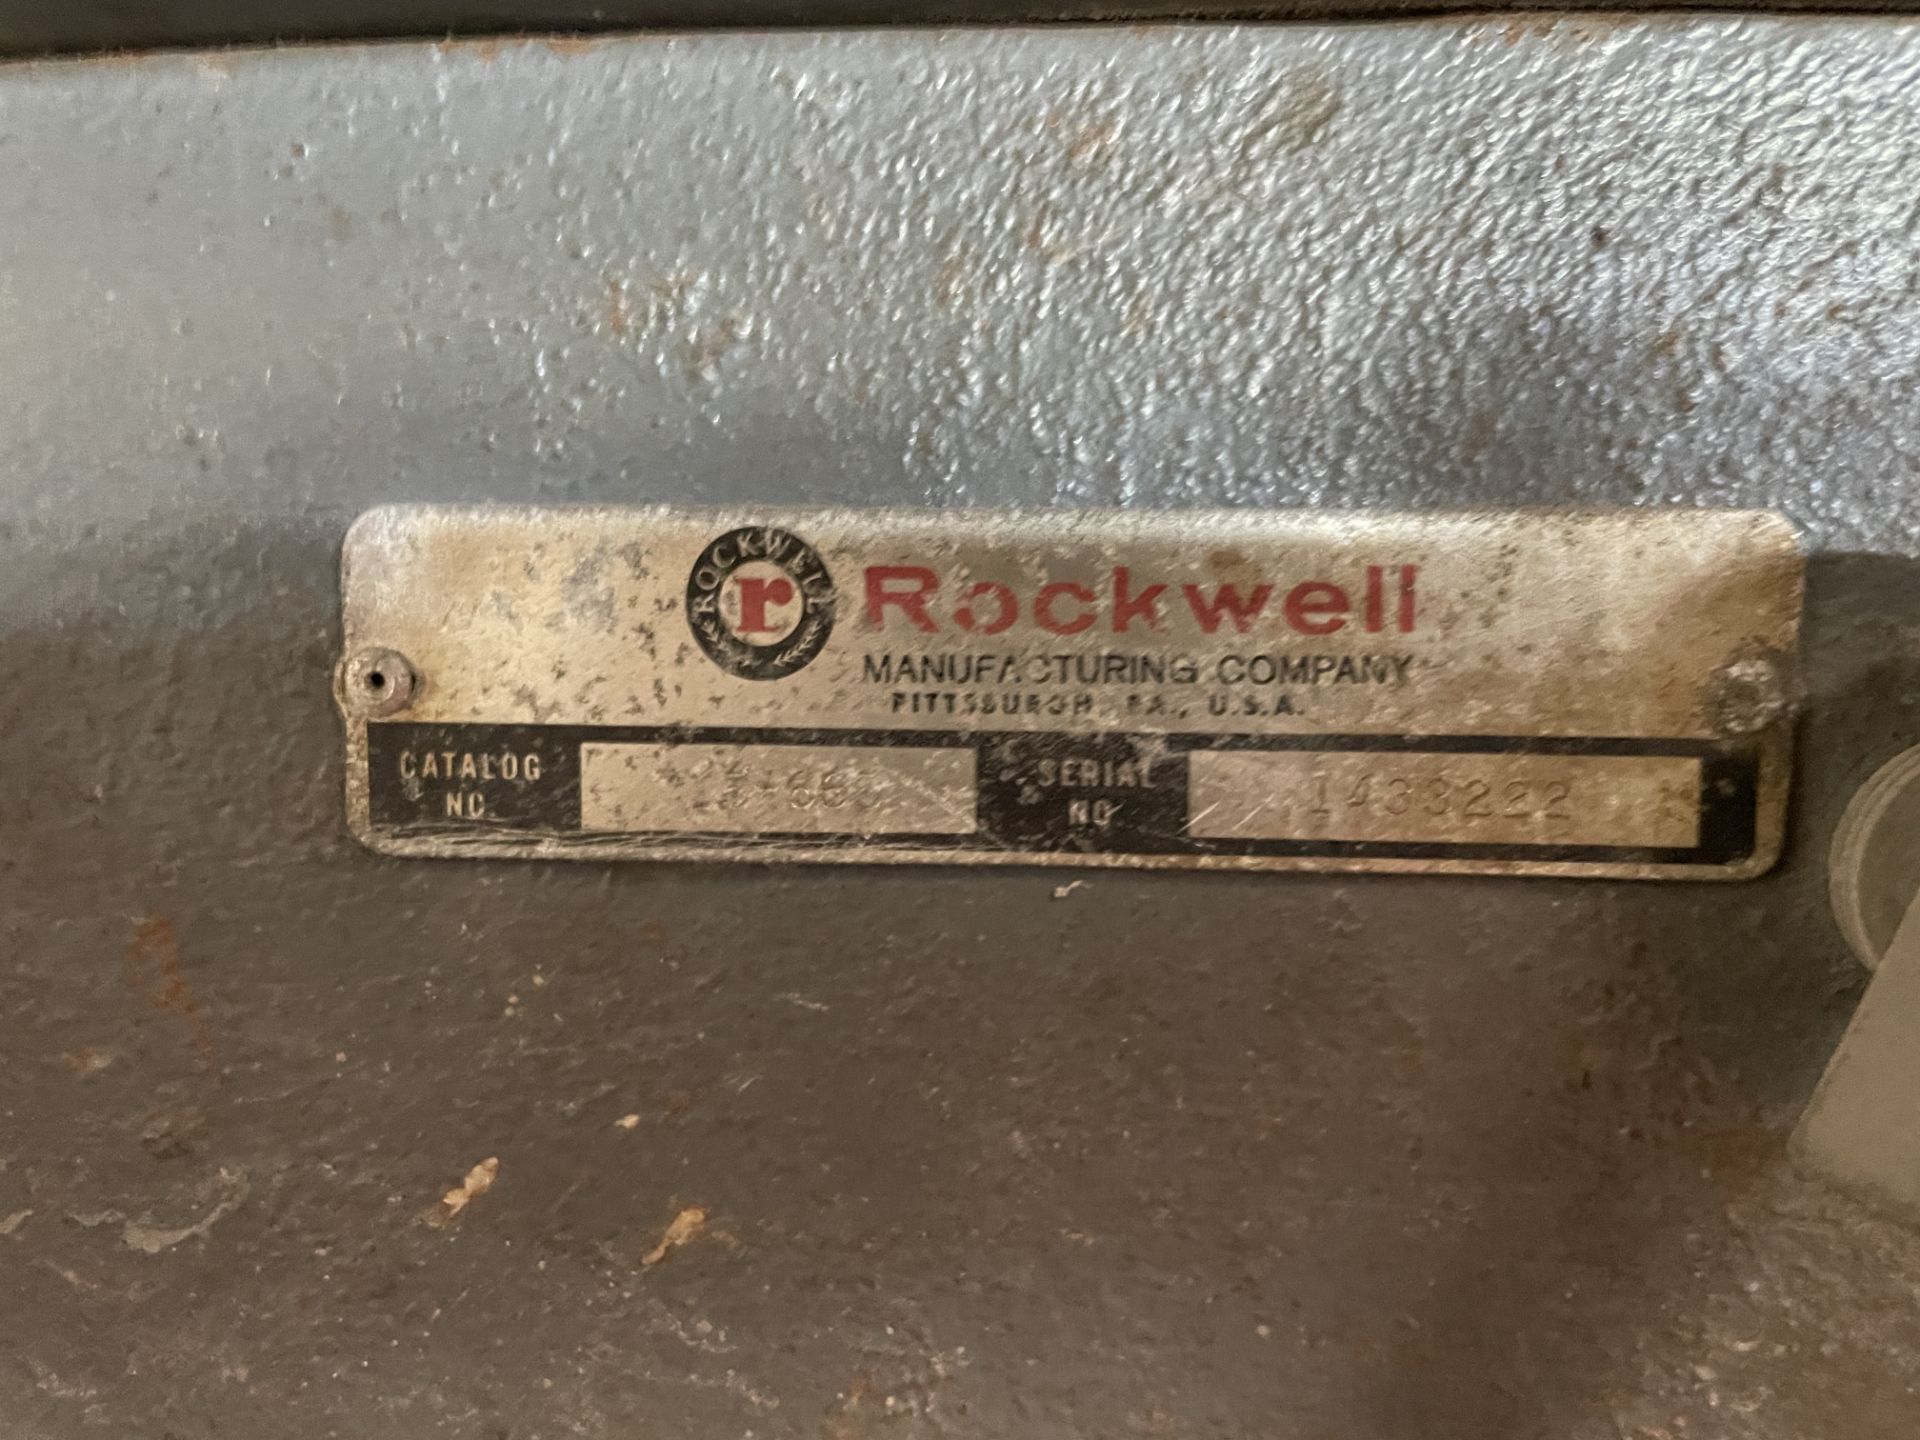 {LOT} Parts Cleaner, Pedestal Grinder, & Rockwell Drill Press - Image 2 of 2